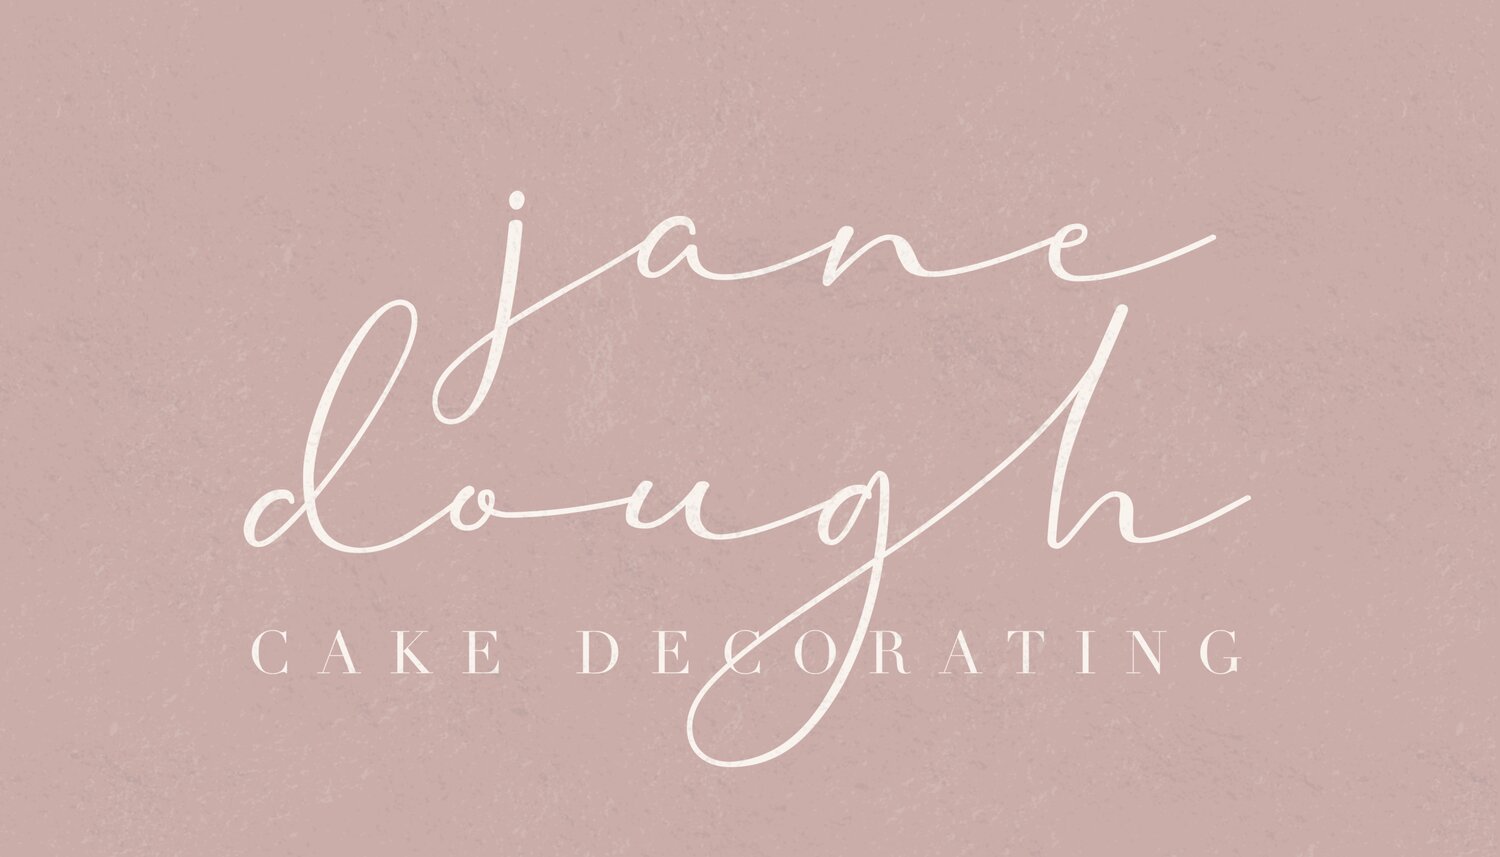 Jane Dough